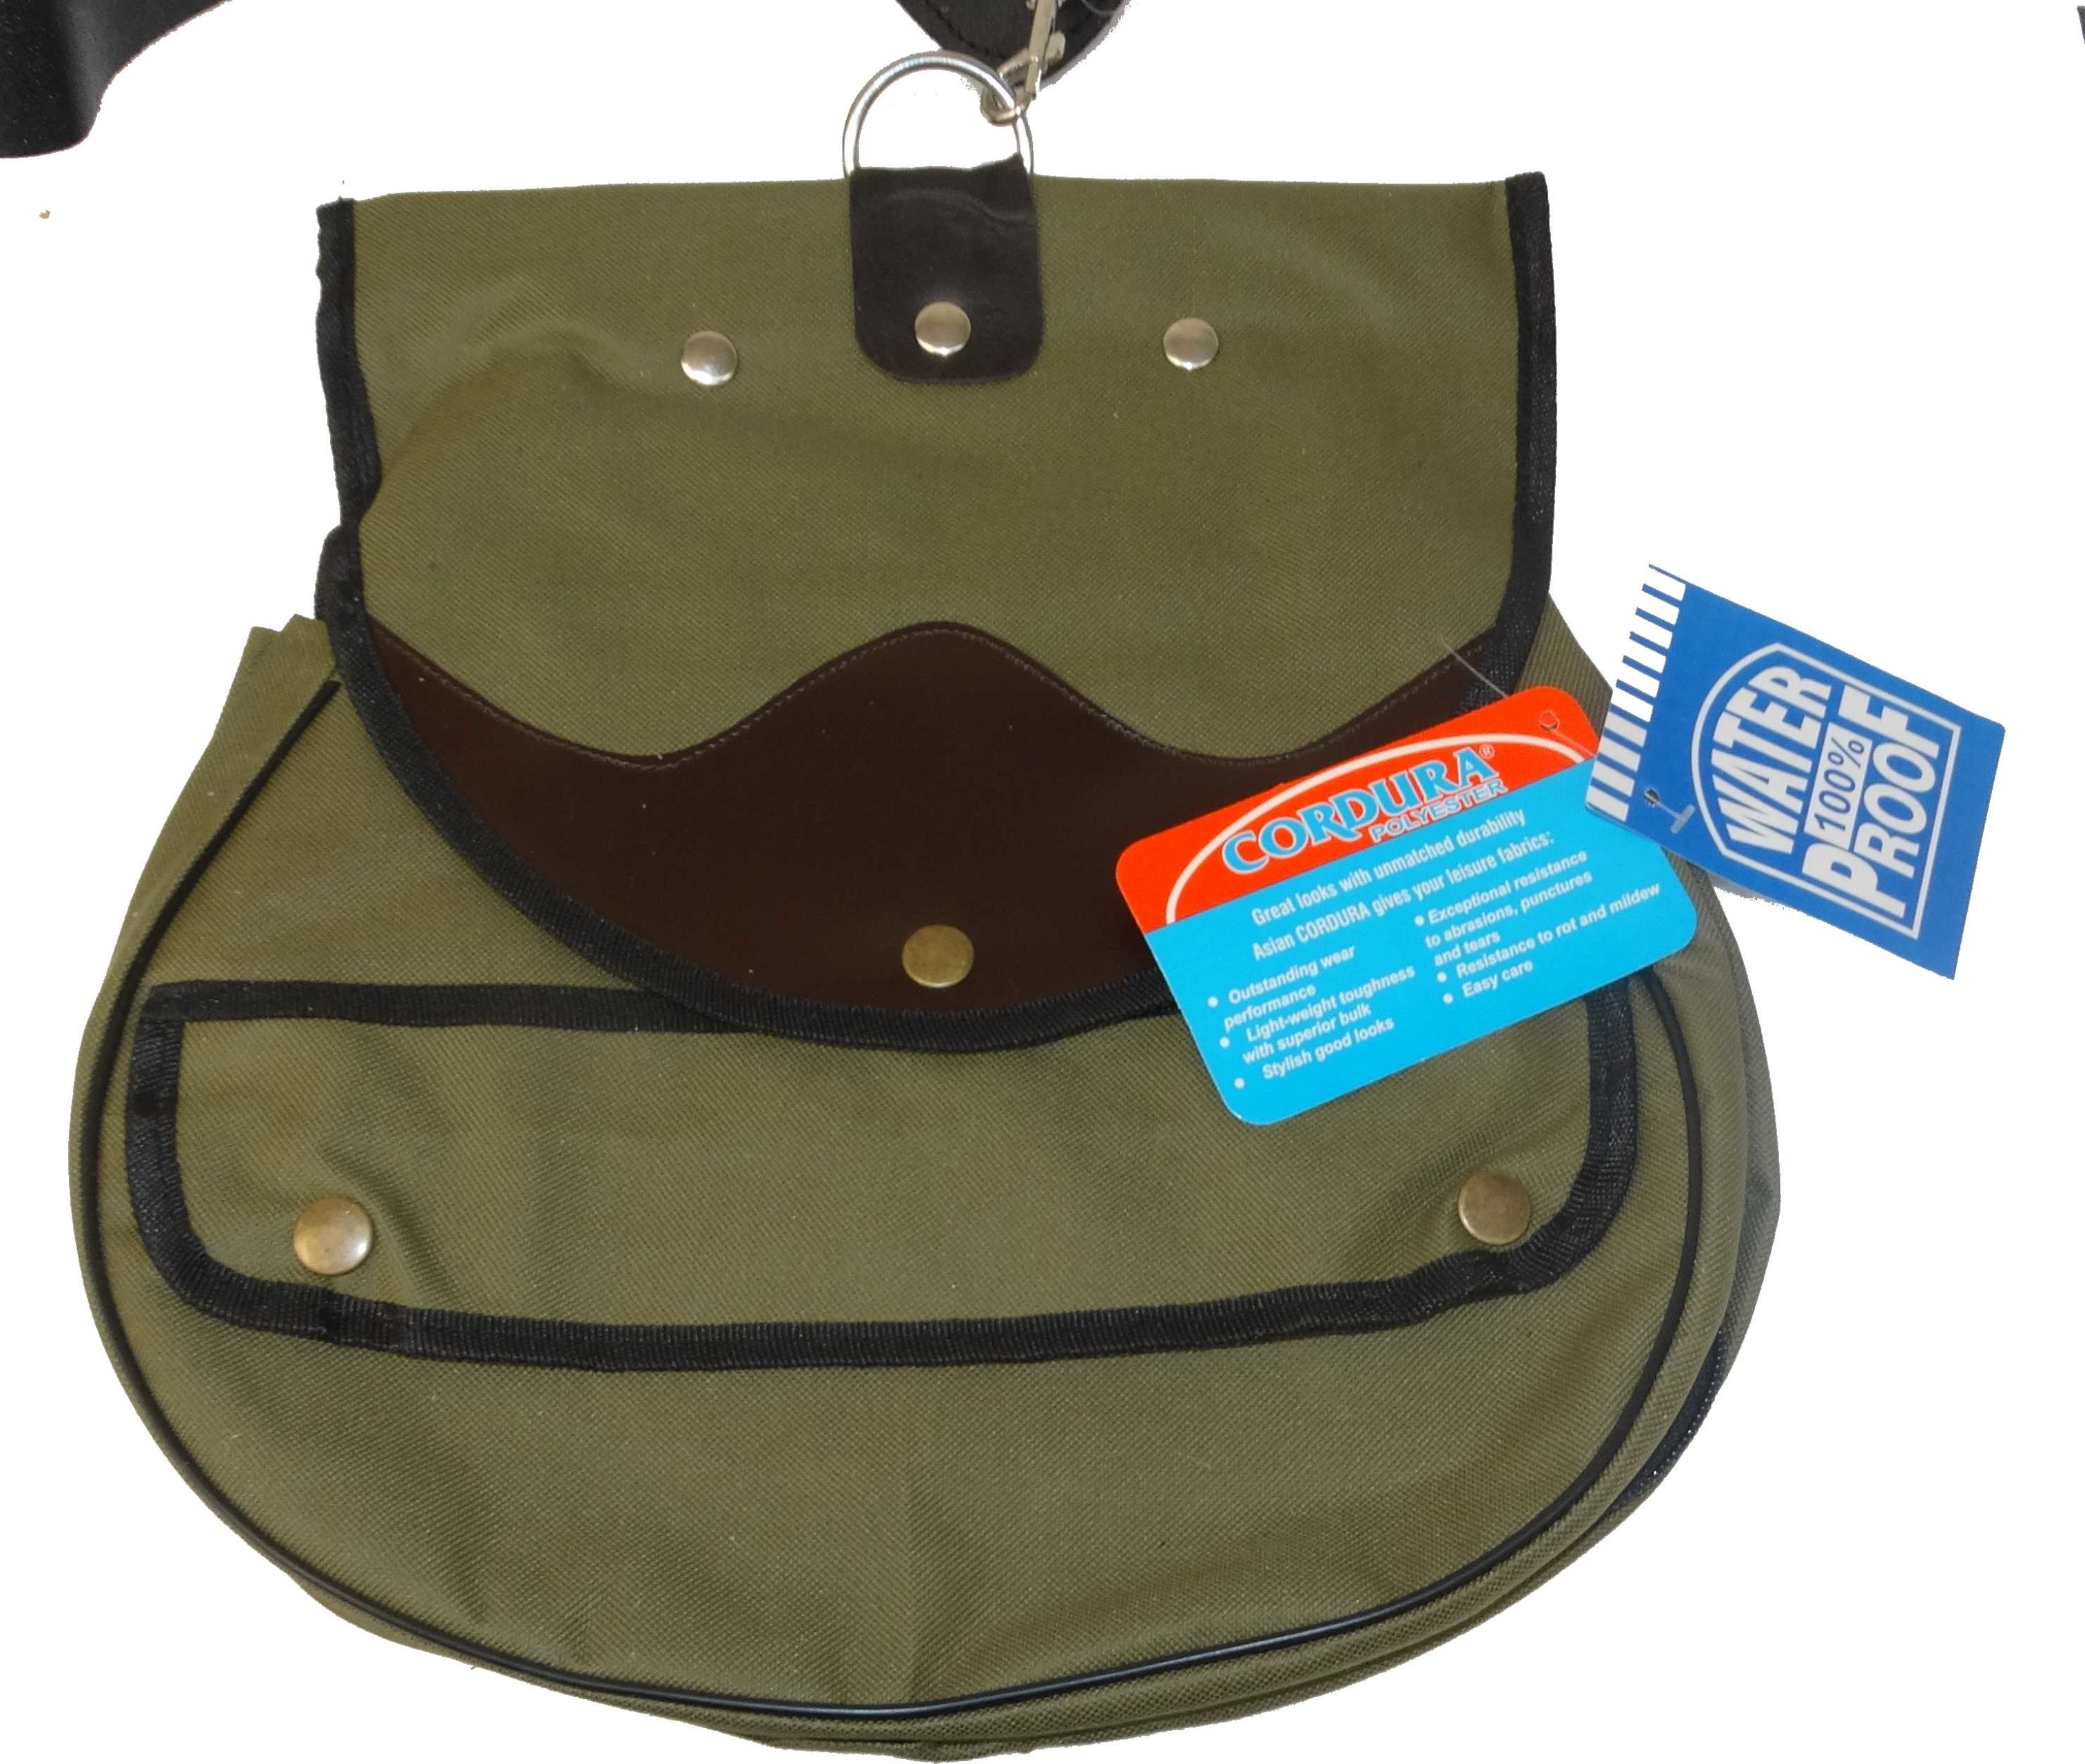 Falconry Cordura Camouflage Training Bag, Shoulder Bag, Falconry Hawking Bag  | eBay